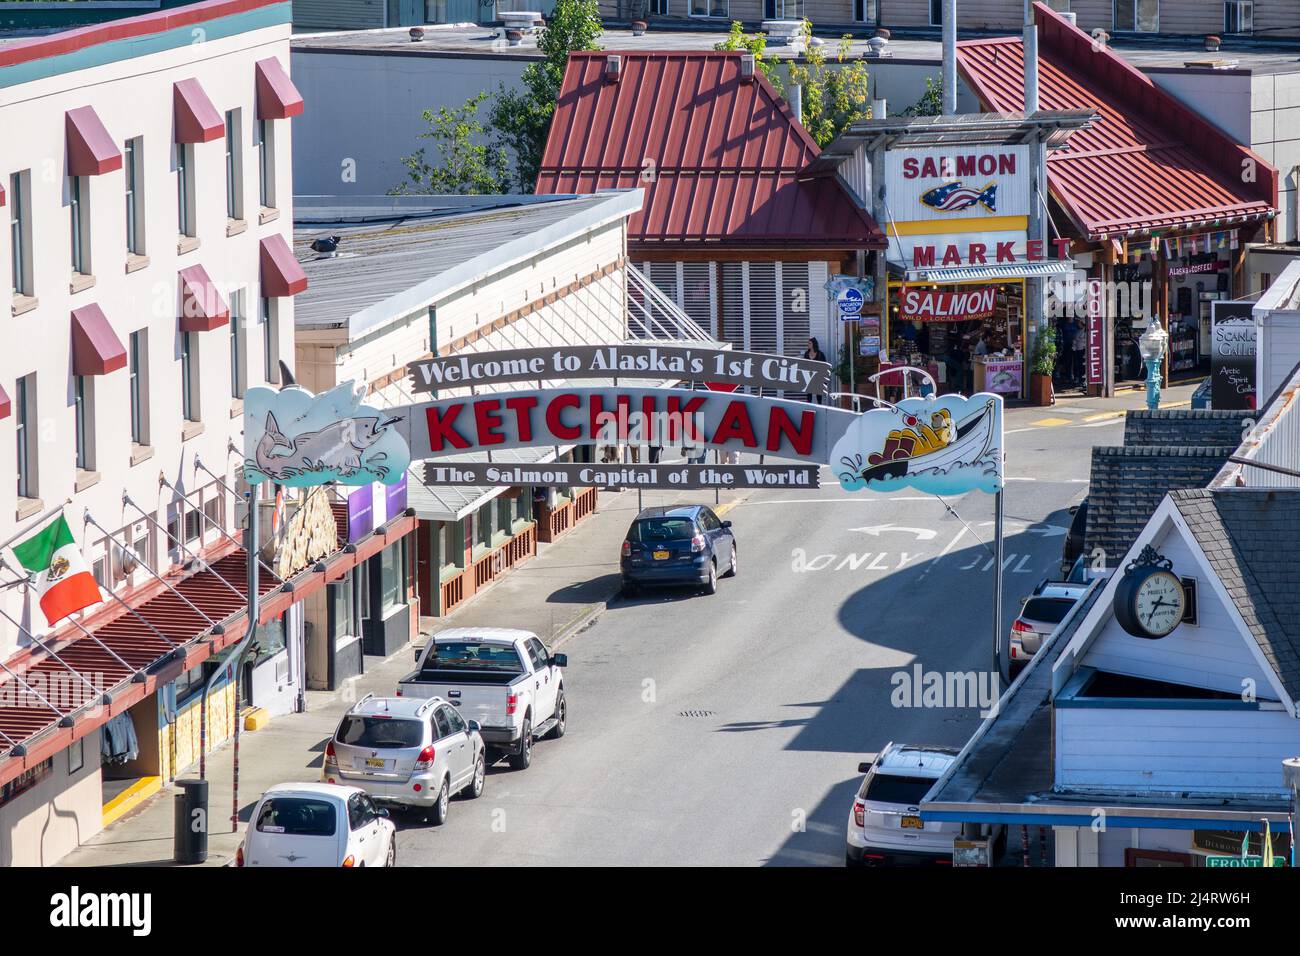 Ketchikan Alaska Downtown Mit Dem Willkommensschild Auf Der Mission Street Ketchikan Salmon Capital Of The World Stockfoto